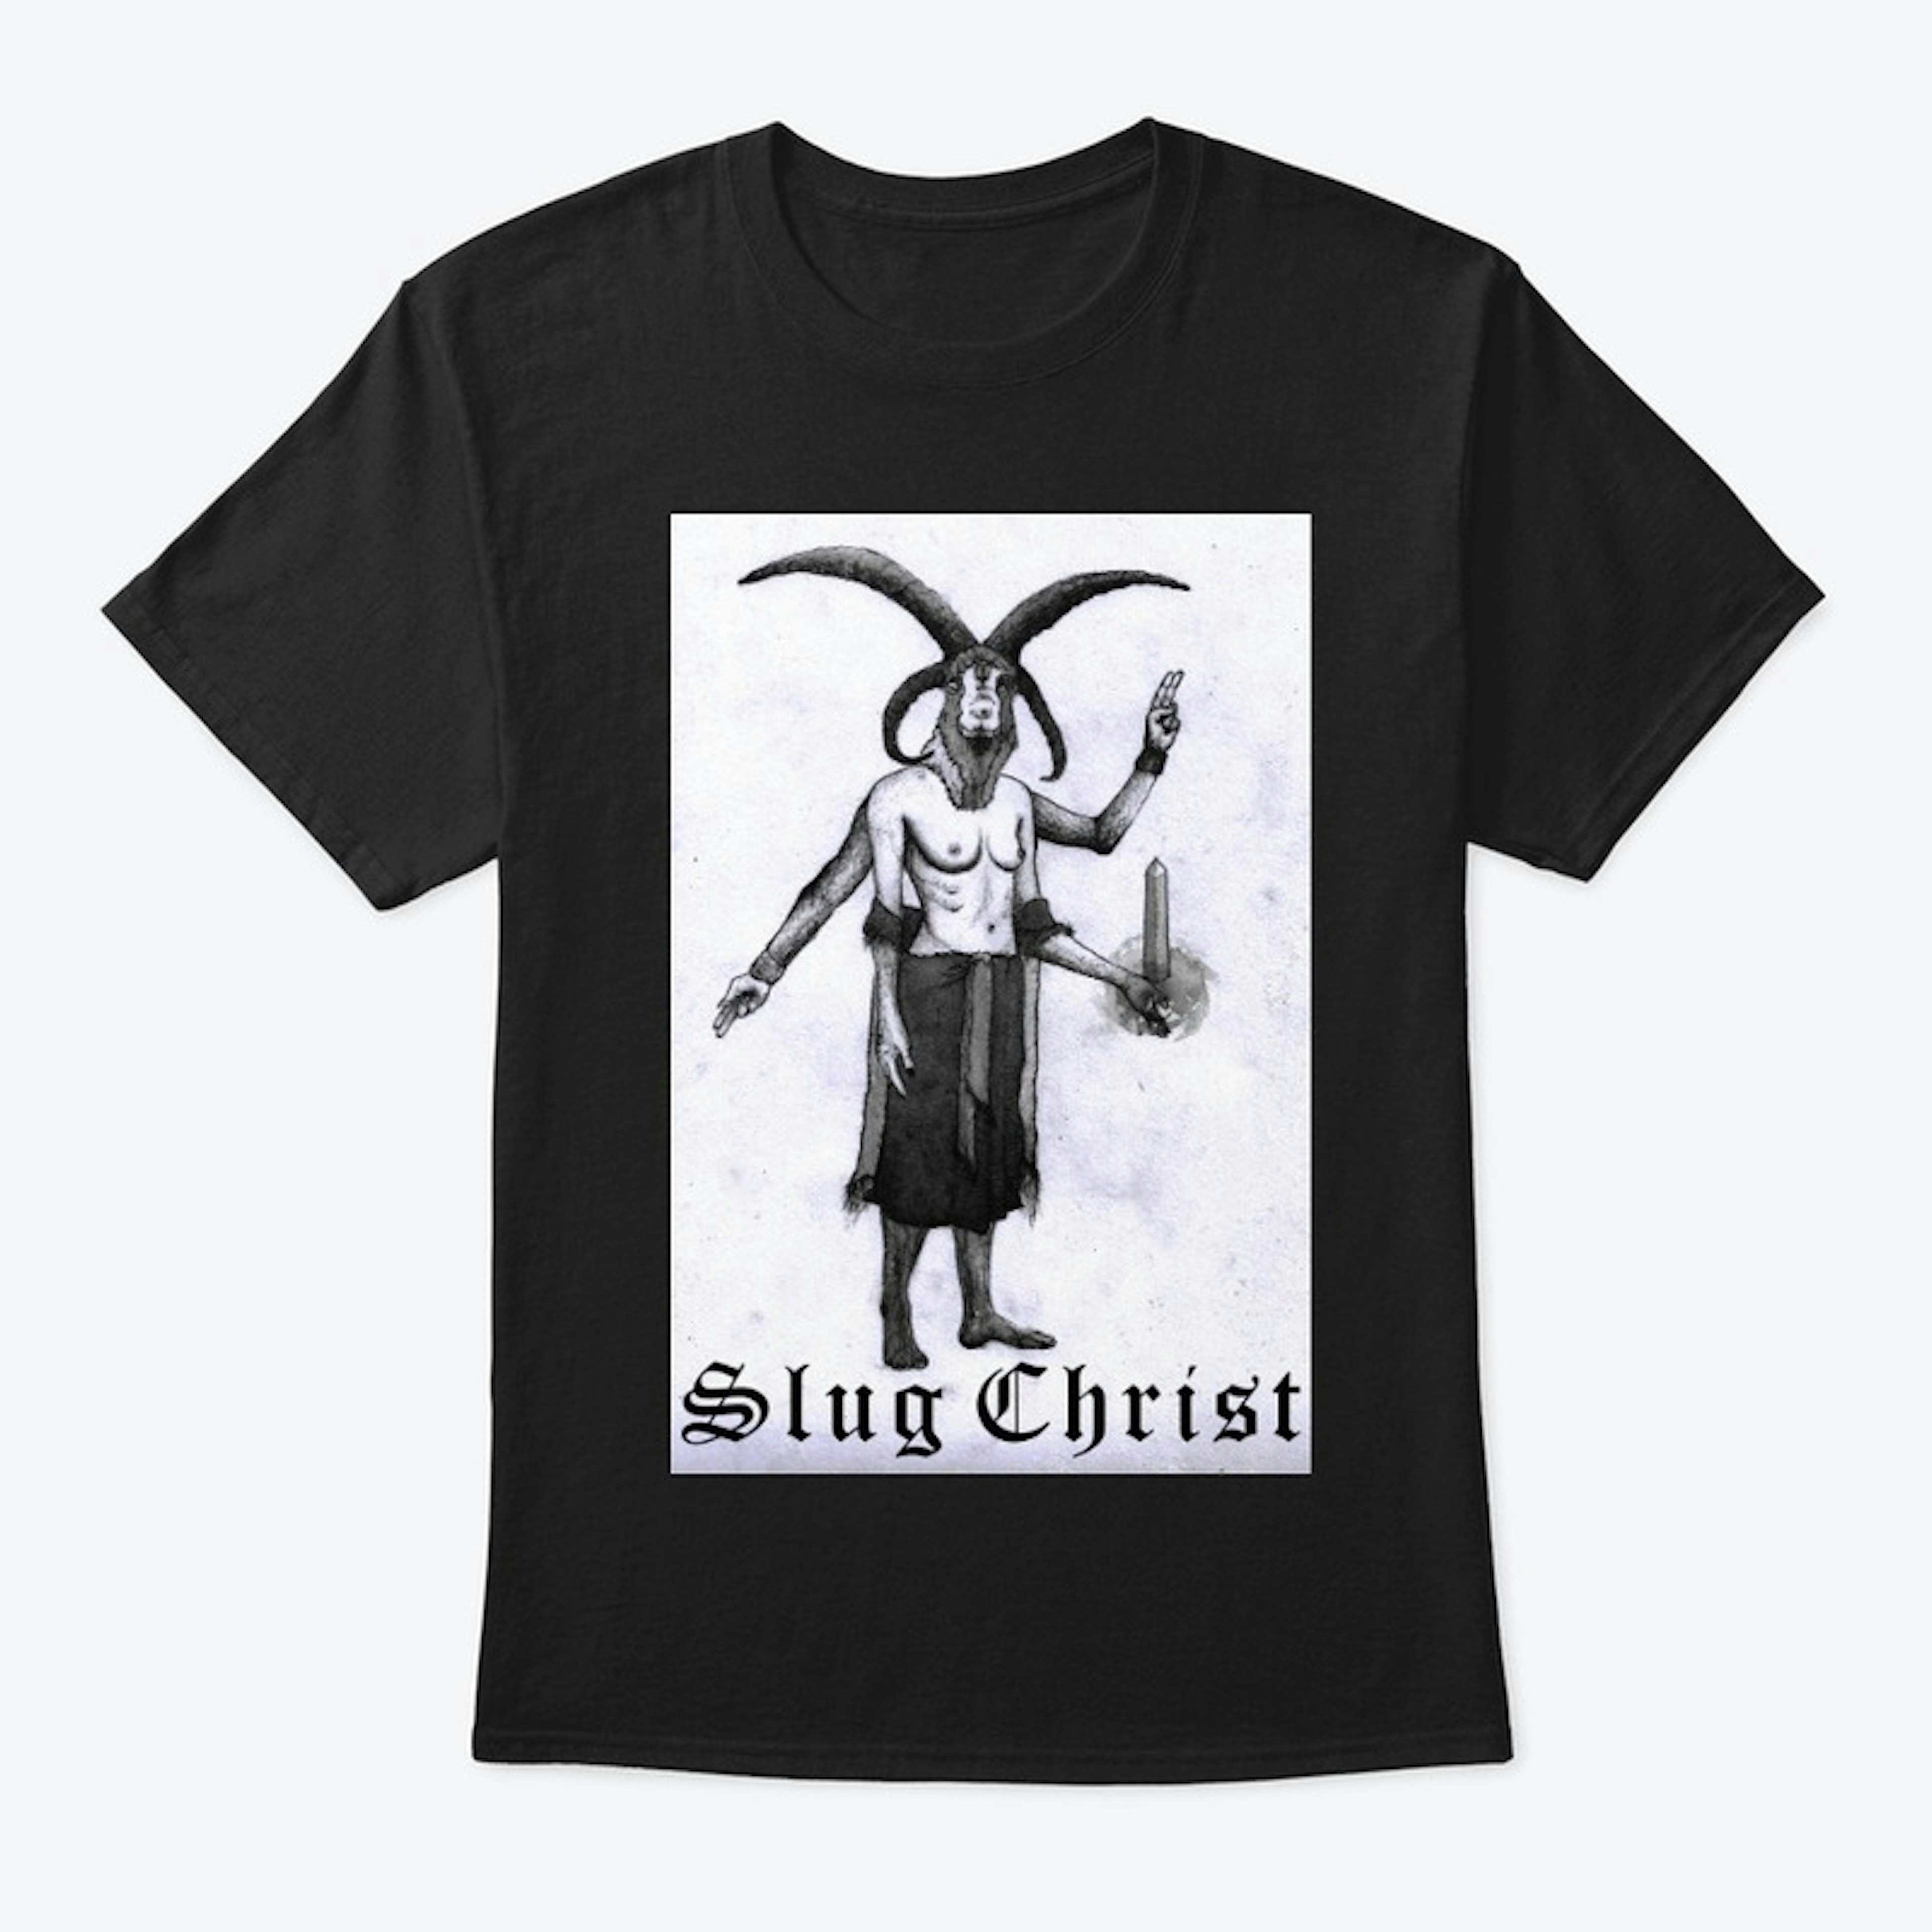 Slug Christ "Cerpanophet" T-Shirt